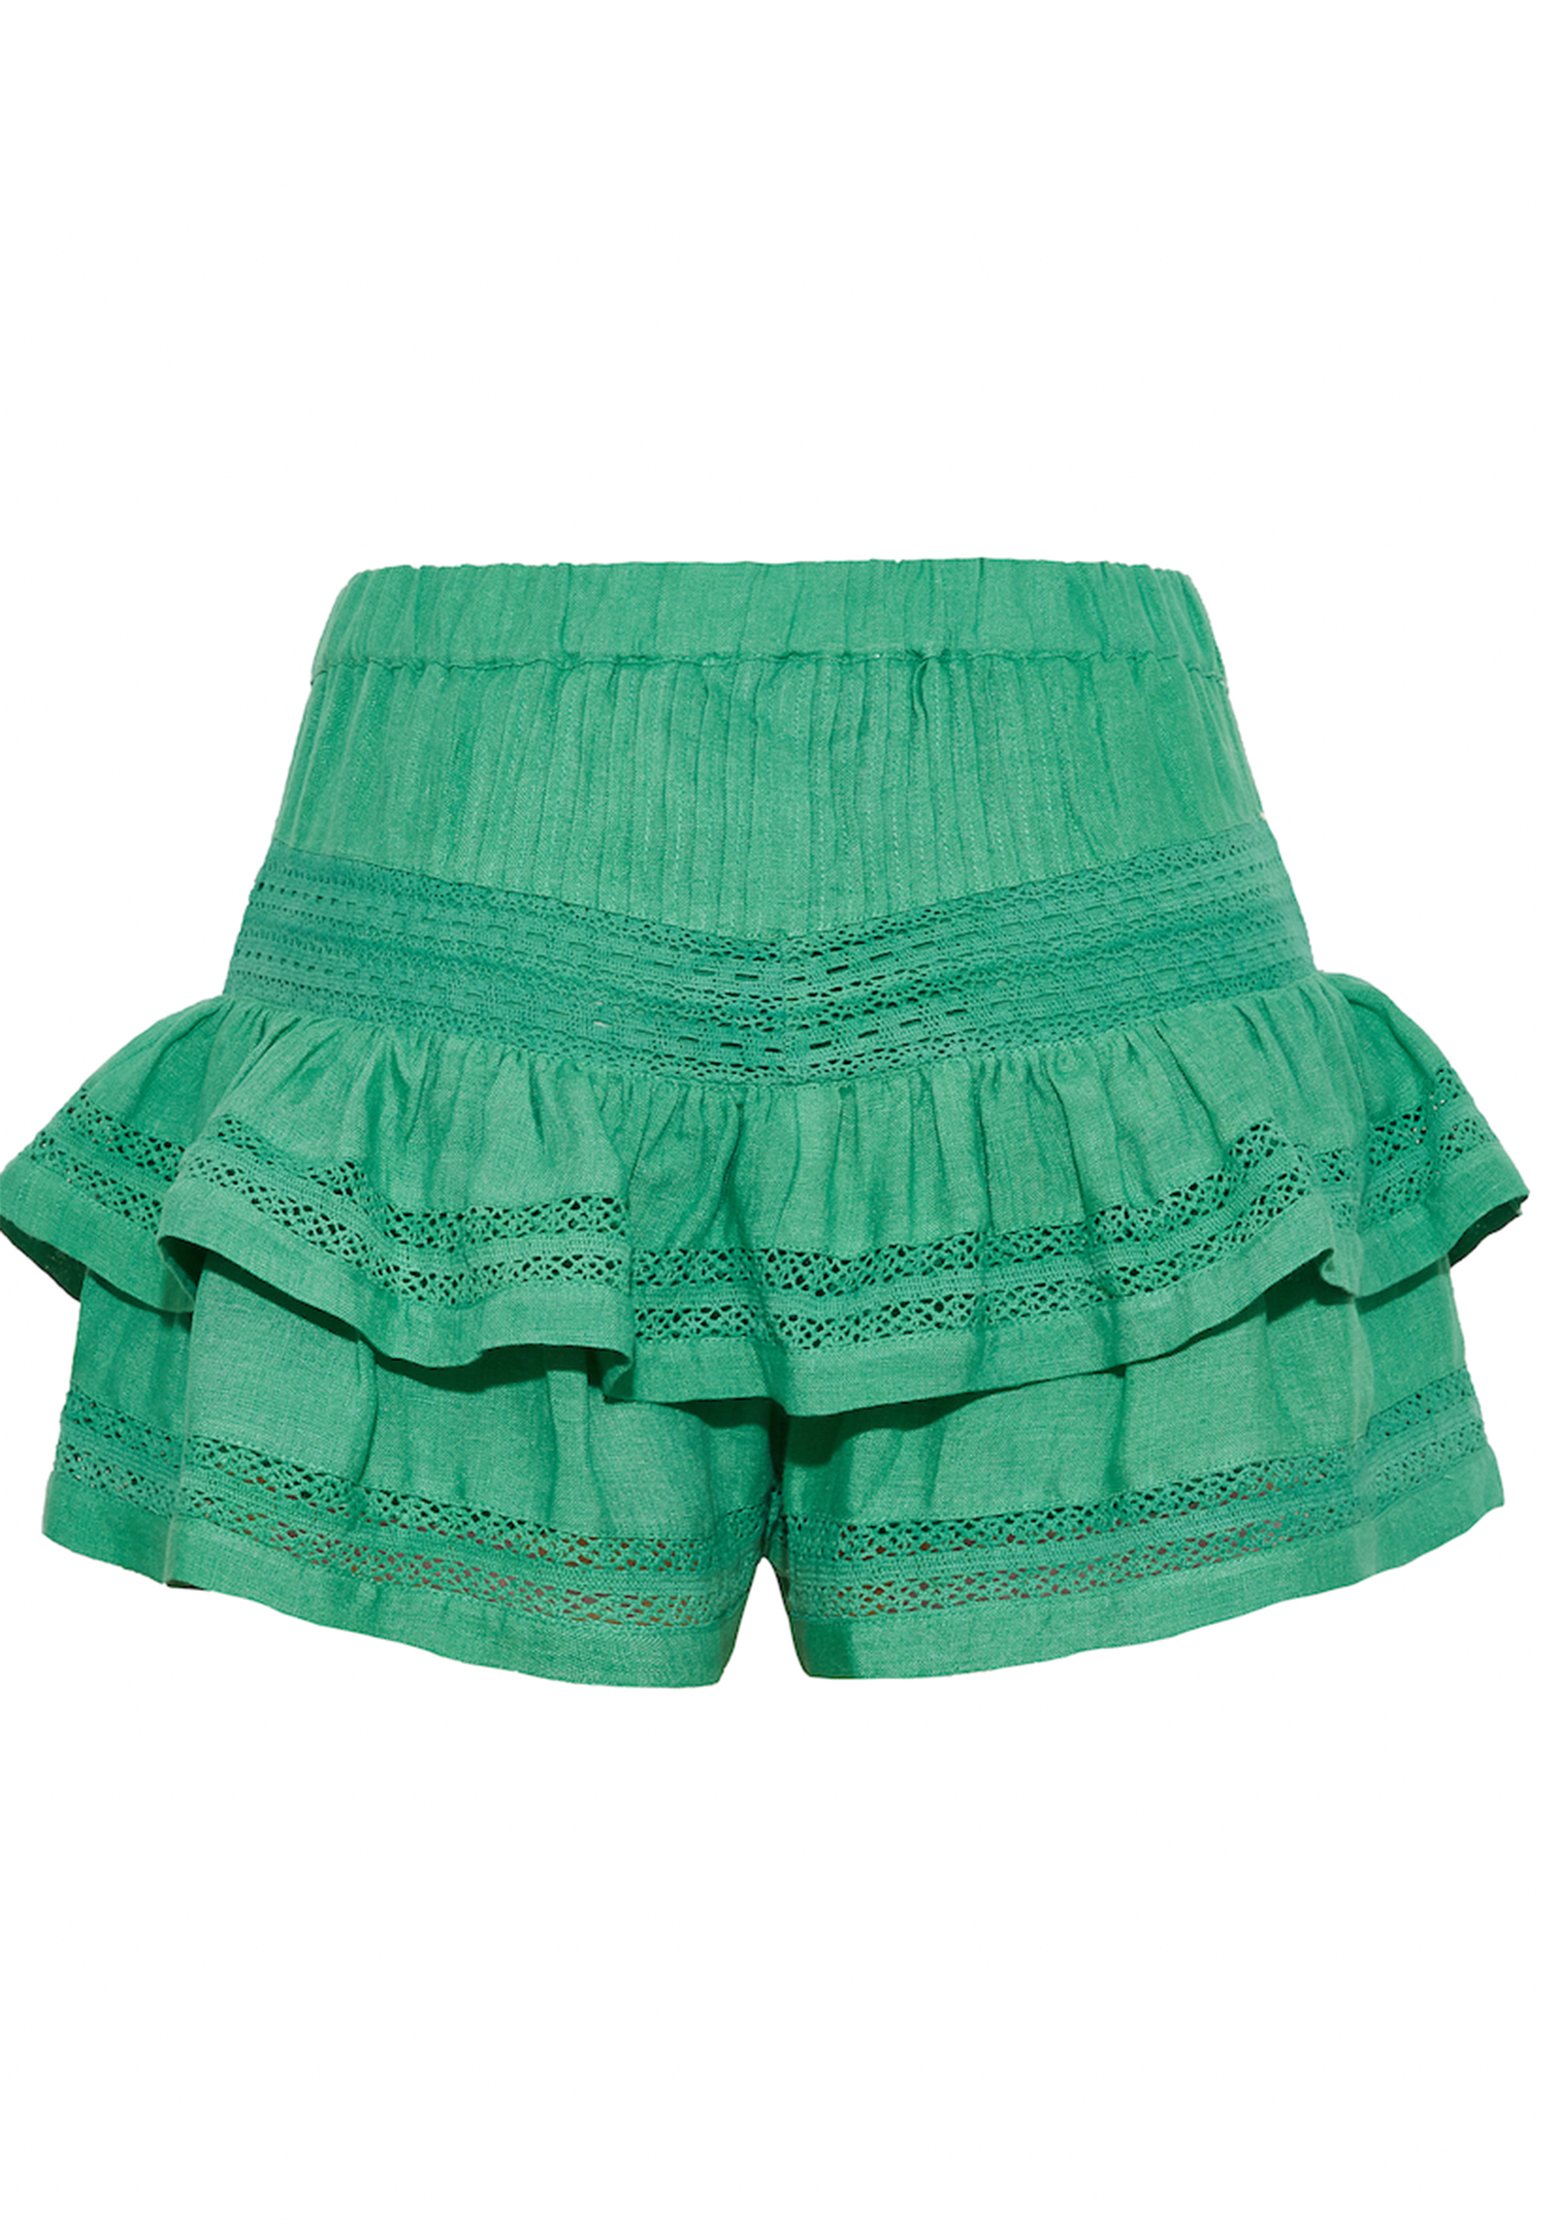 Shorts MAIA BERGMAN Color: mint (Code: 2252) in online store Allure